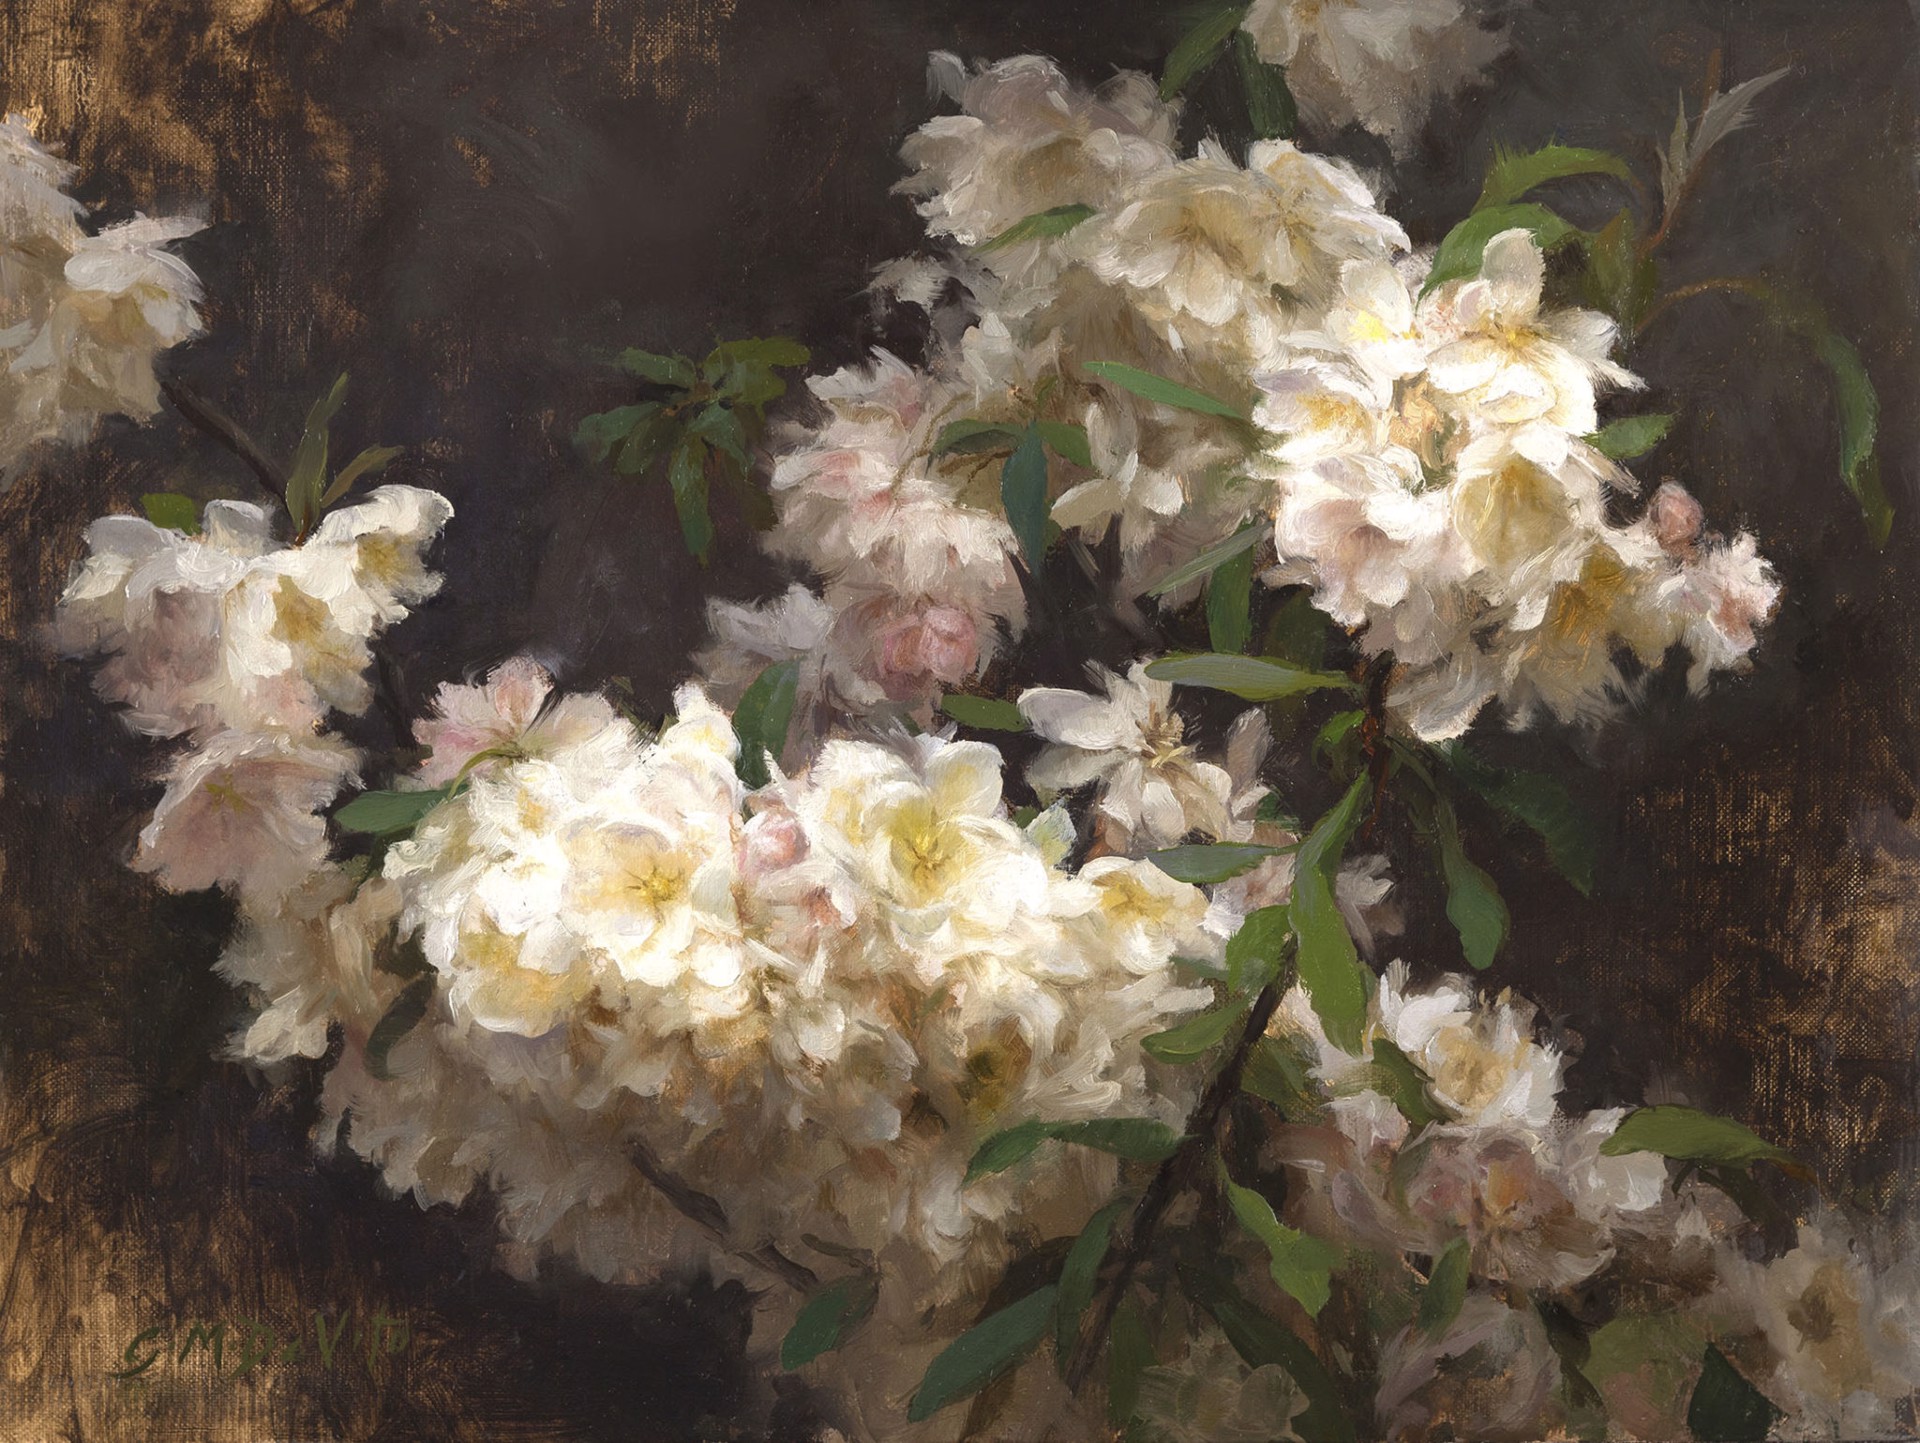 Apple Blossoms by Grace DeVito